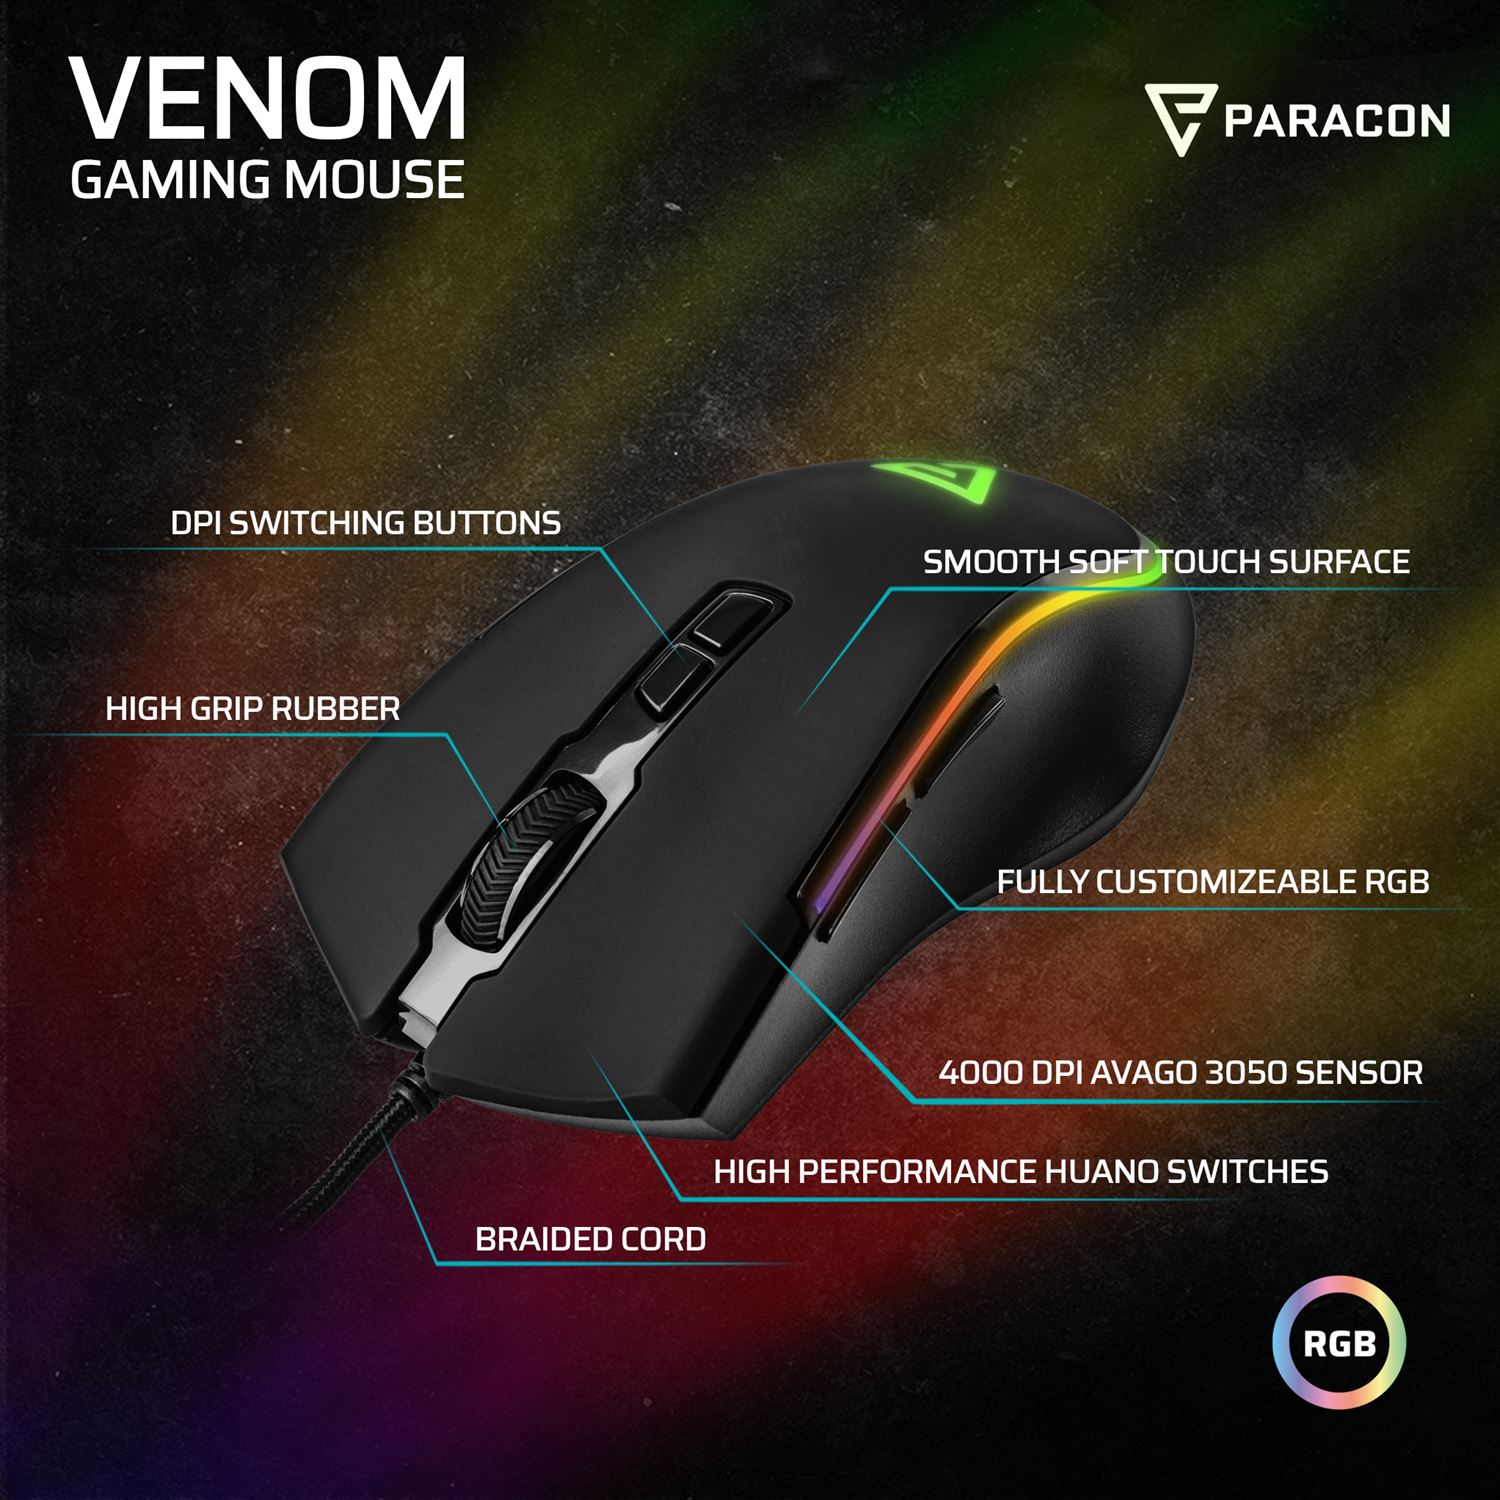 Paracon Venom Gaming Mouse Paracon